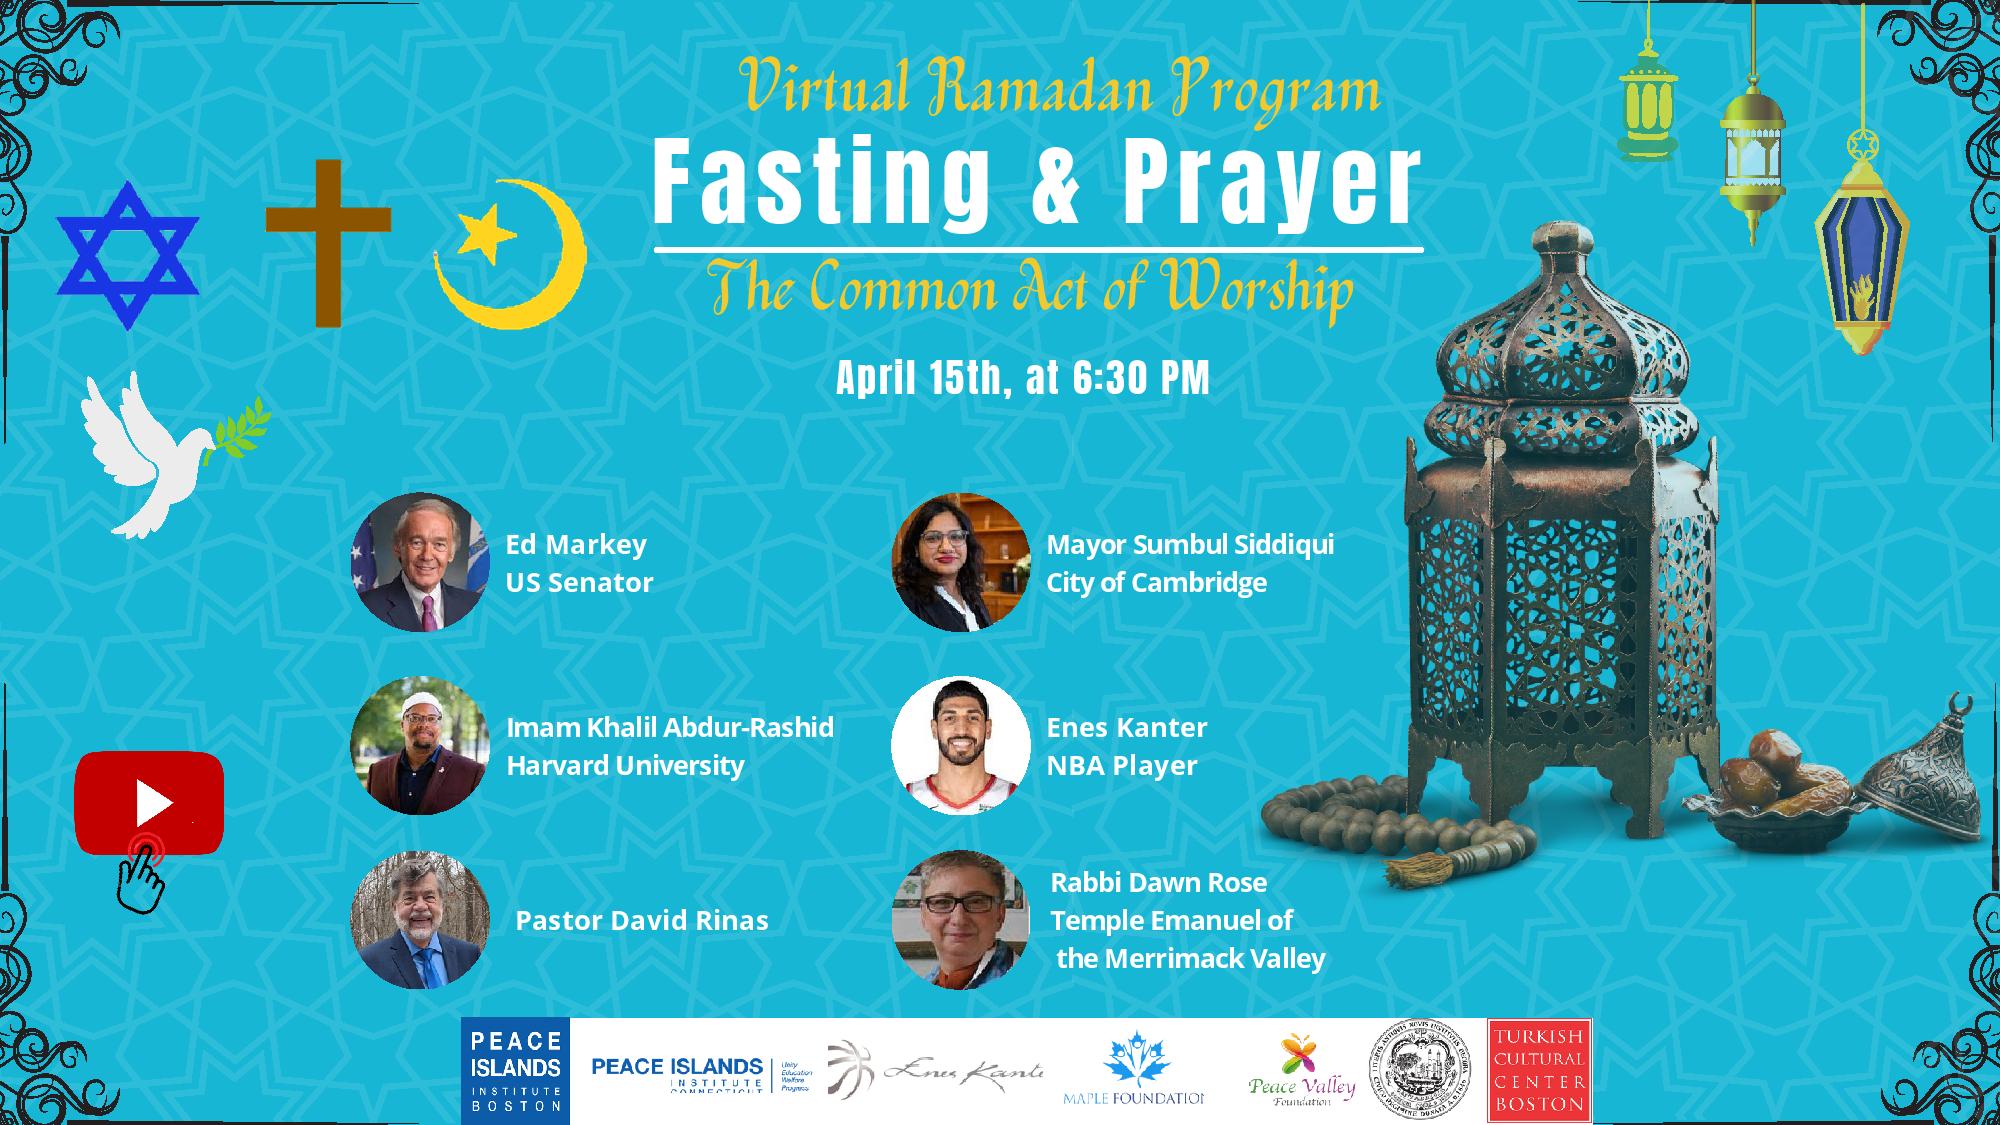 Ramadan Program